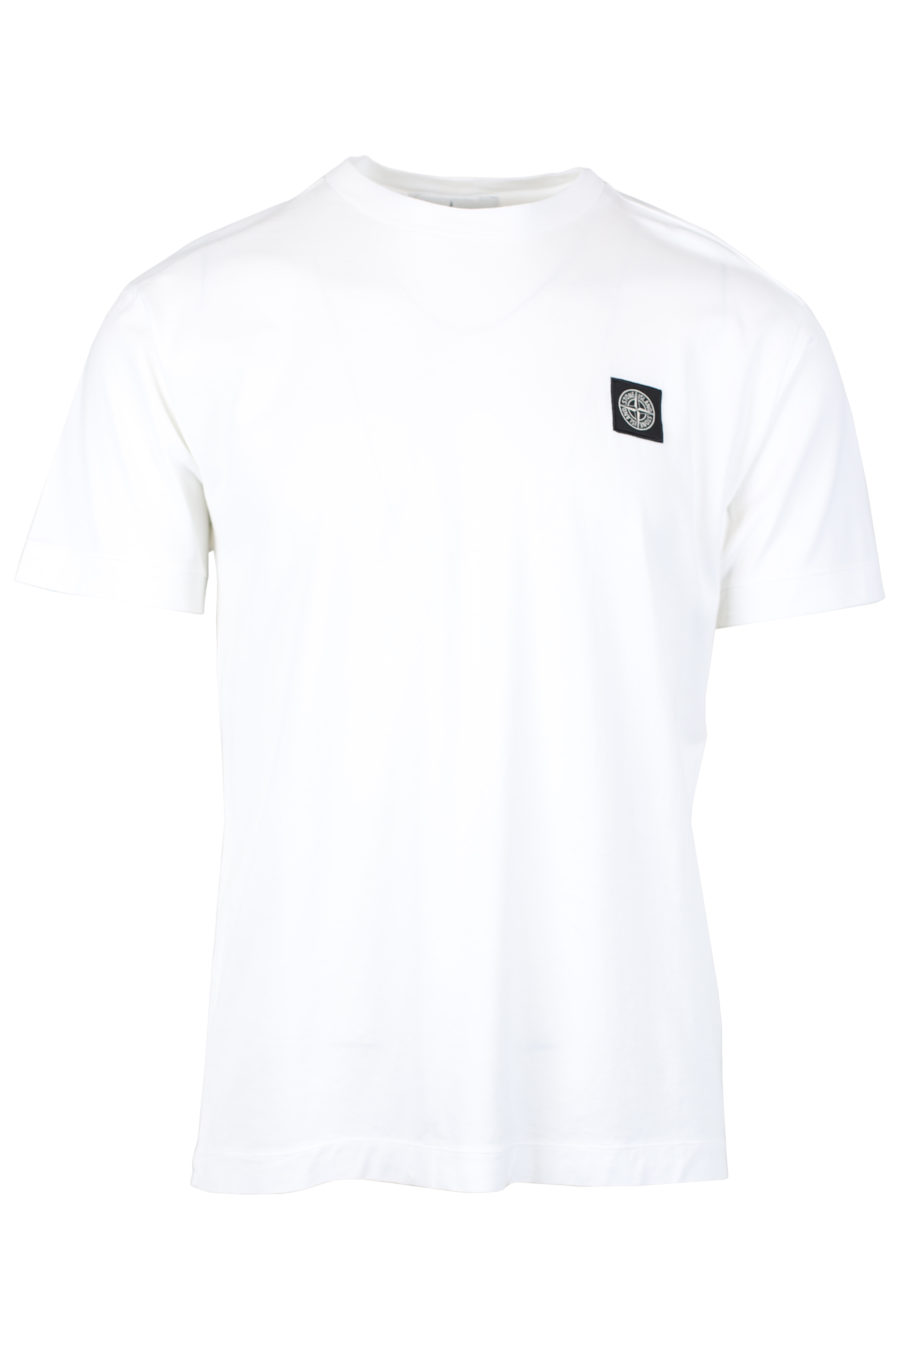 Camiseta blanca con parche - IMG 2491